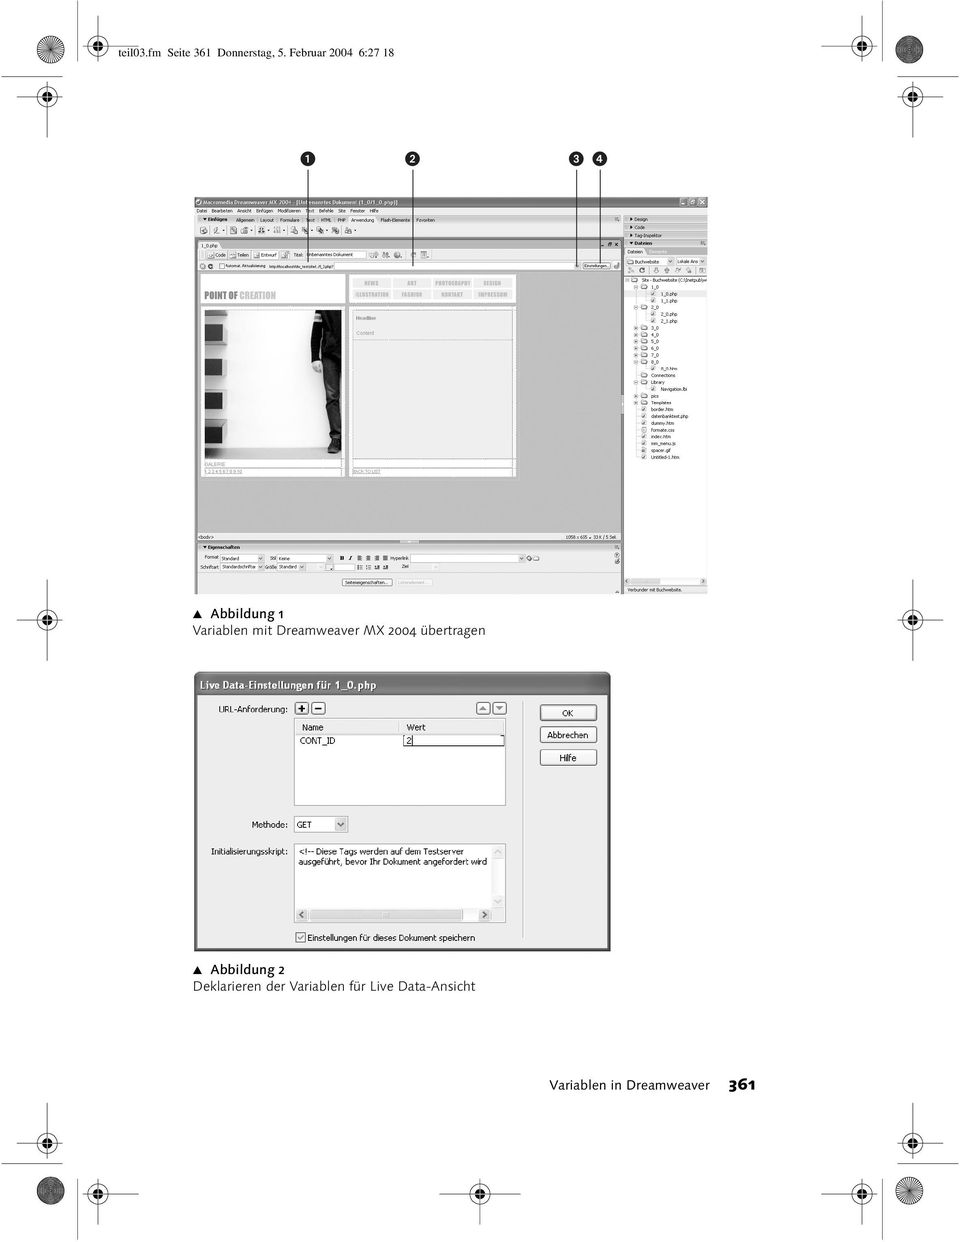 Dreamweaver MX 2004 übertragen Abbildung 2